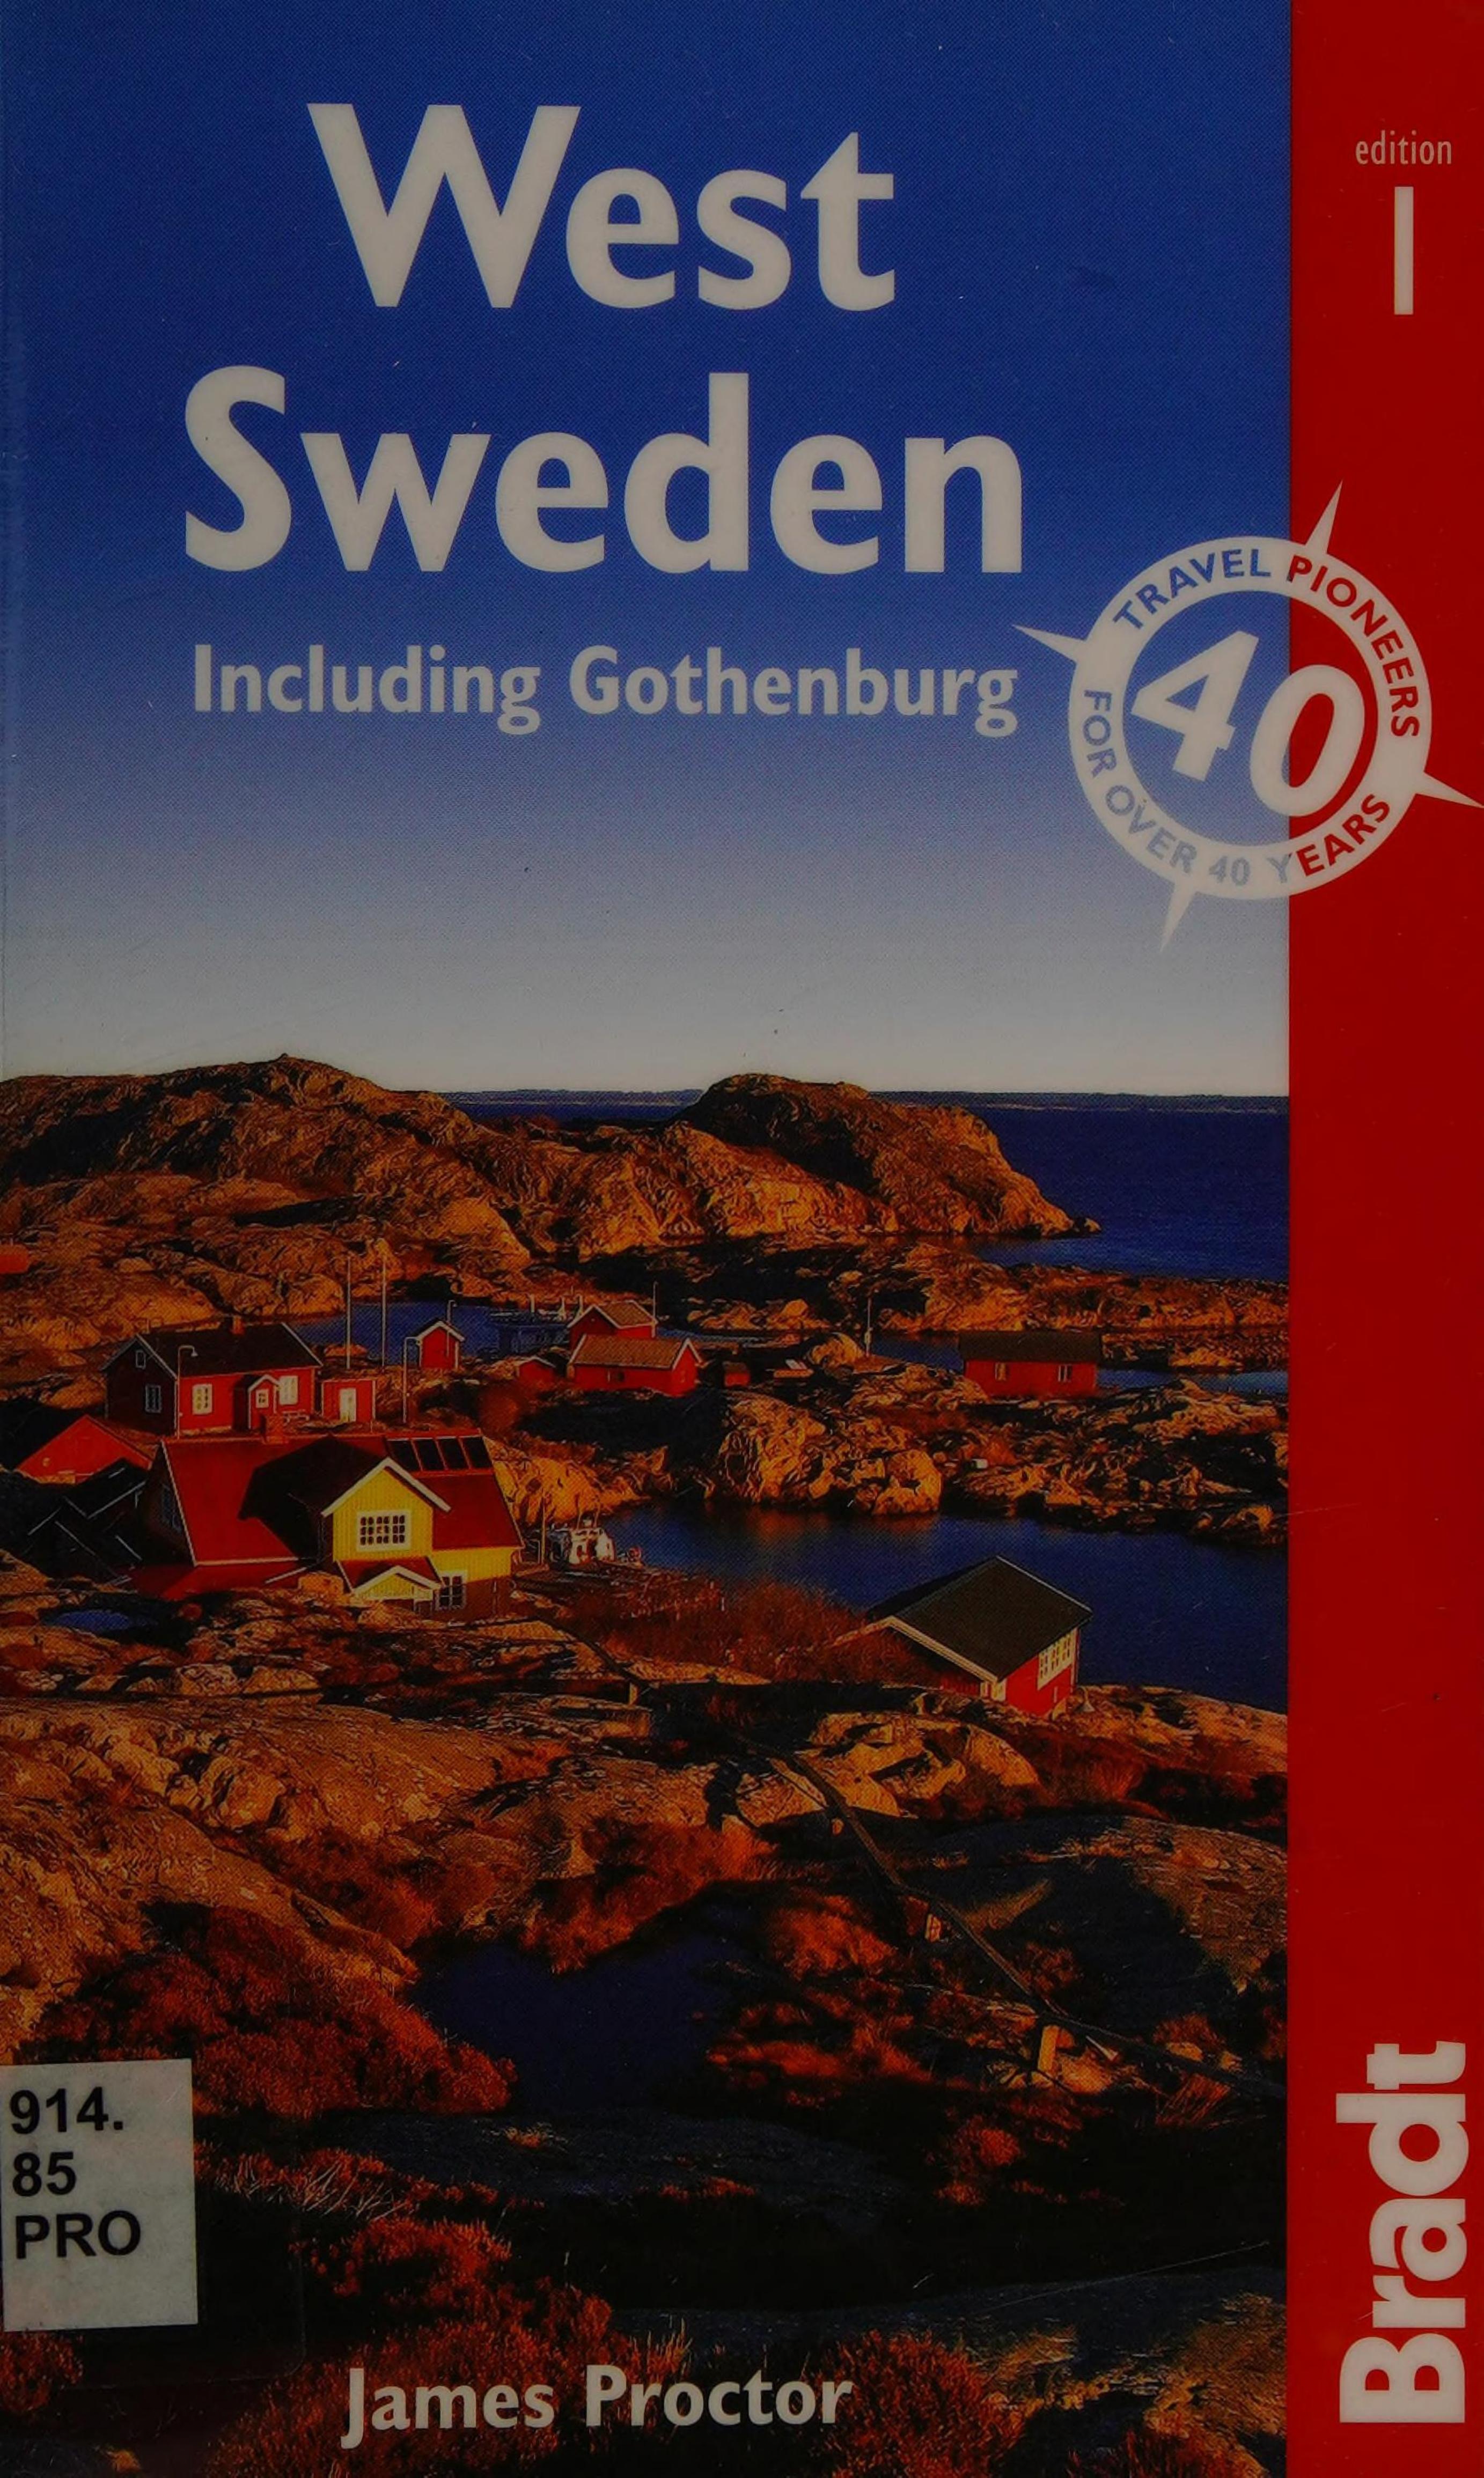 West Sweden: including Gothenburg: The Bradt Travel Guide by James Proctor